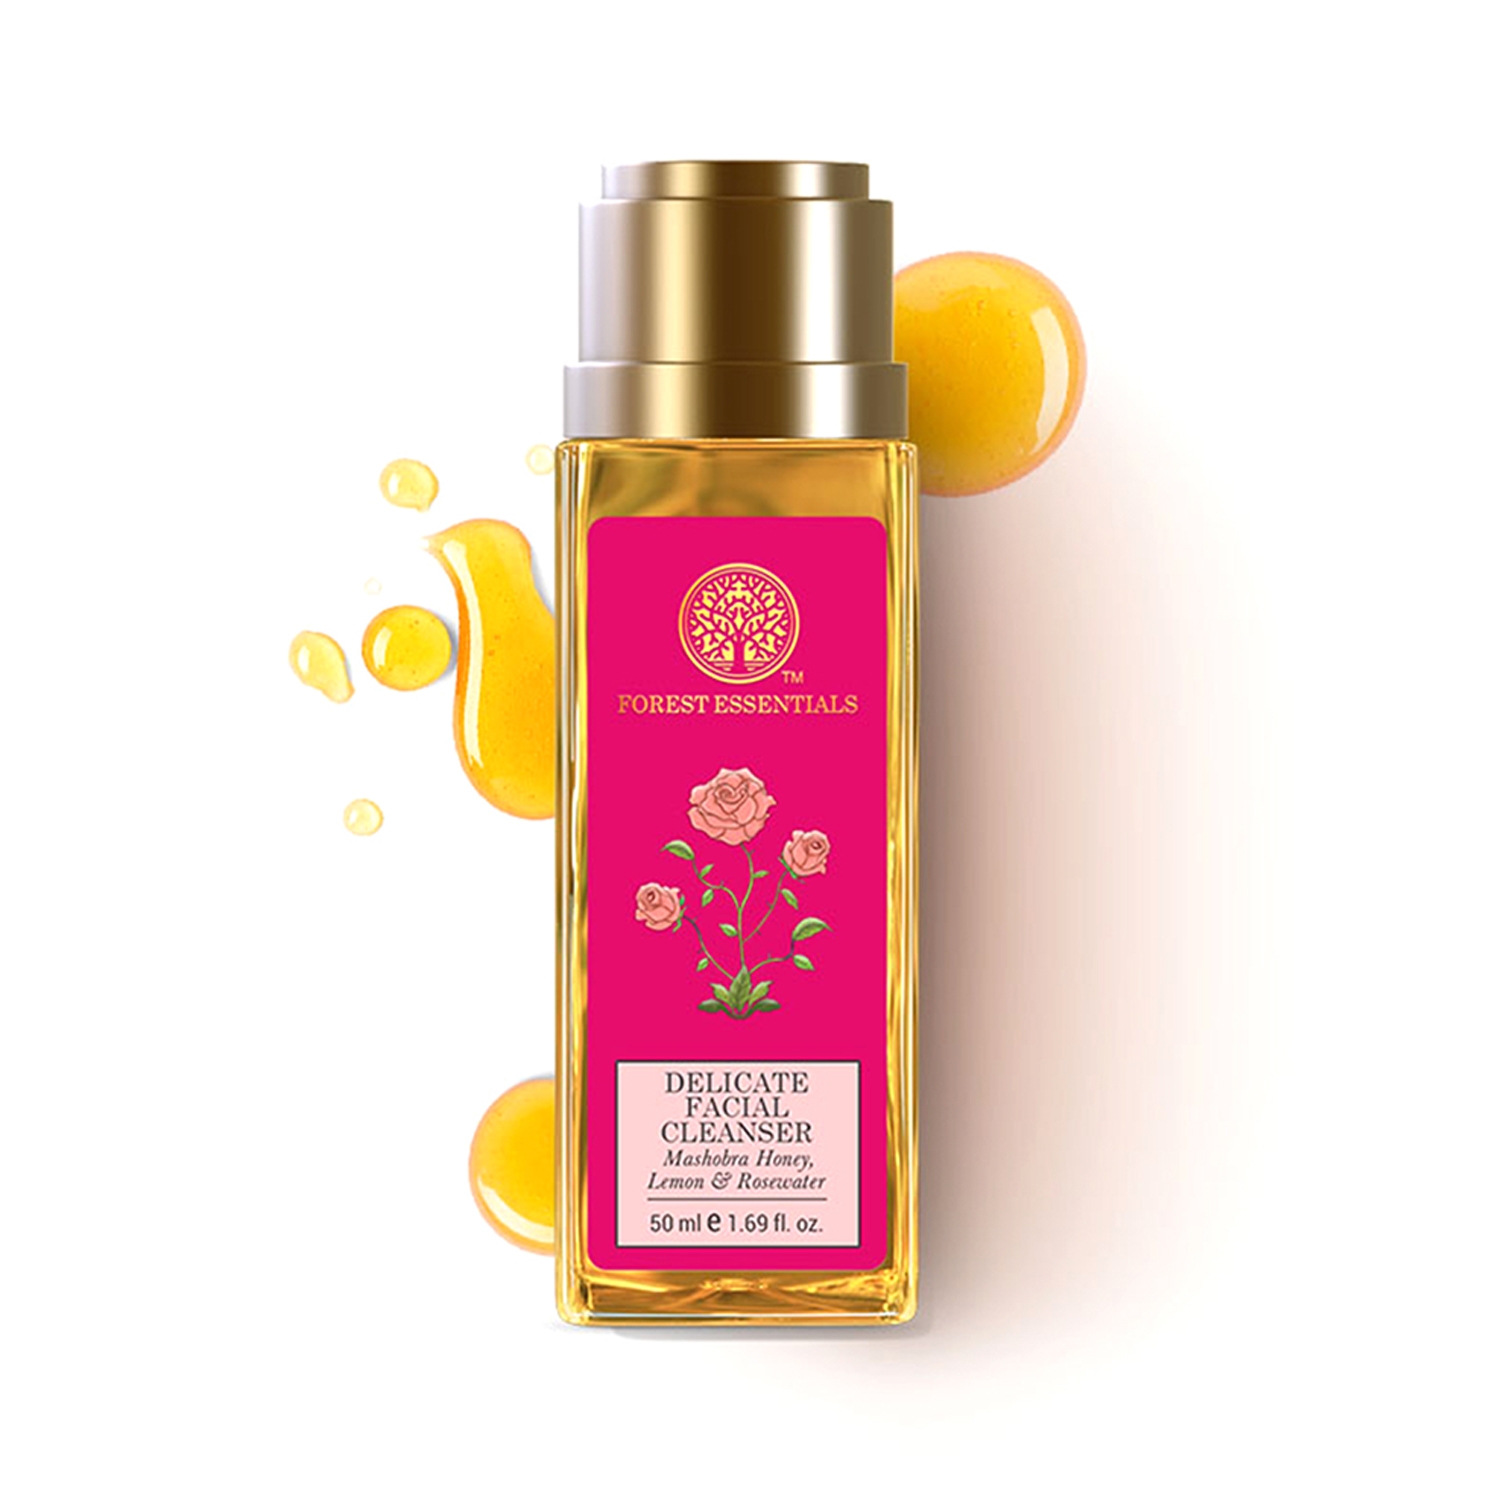 Forest Essentials | Forest Essentials Mashobra Honey Lemon & Rosewater Delicate Facial Cleanser (50ml)